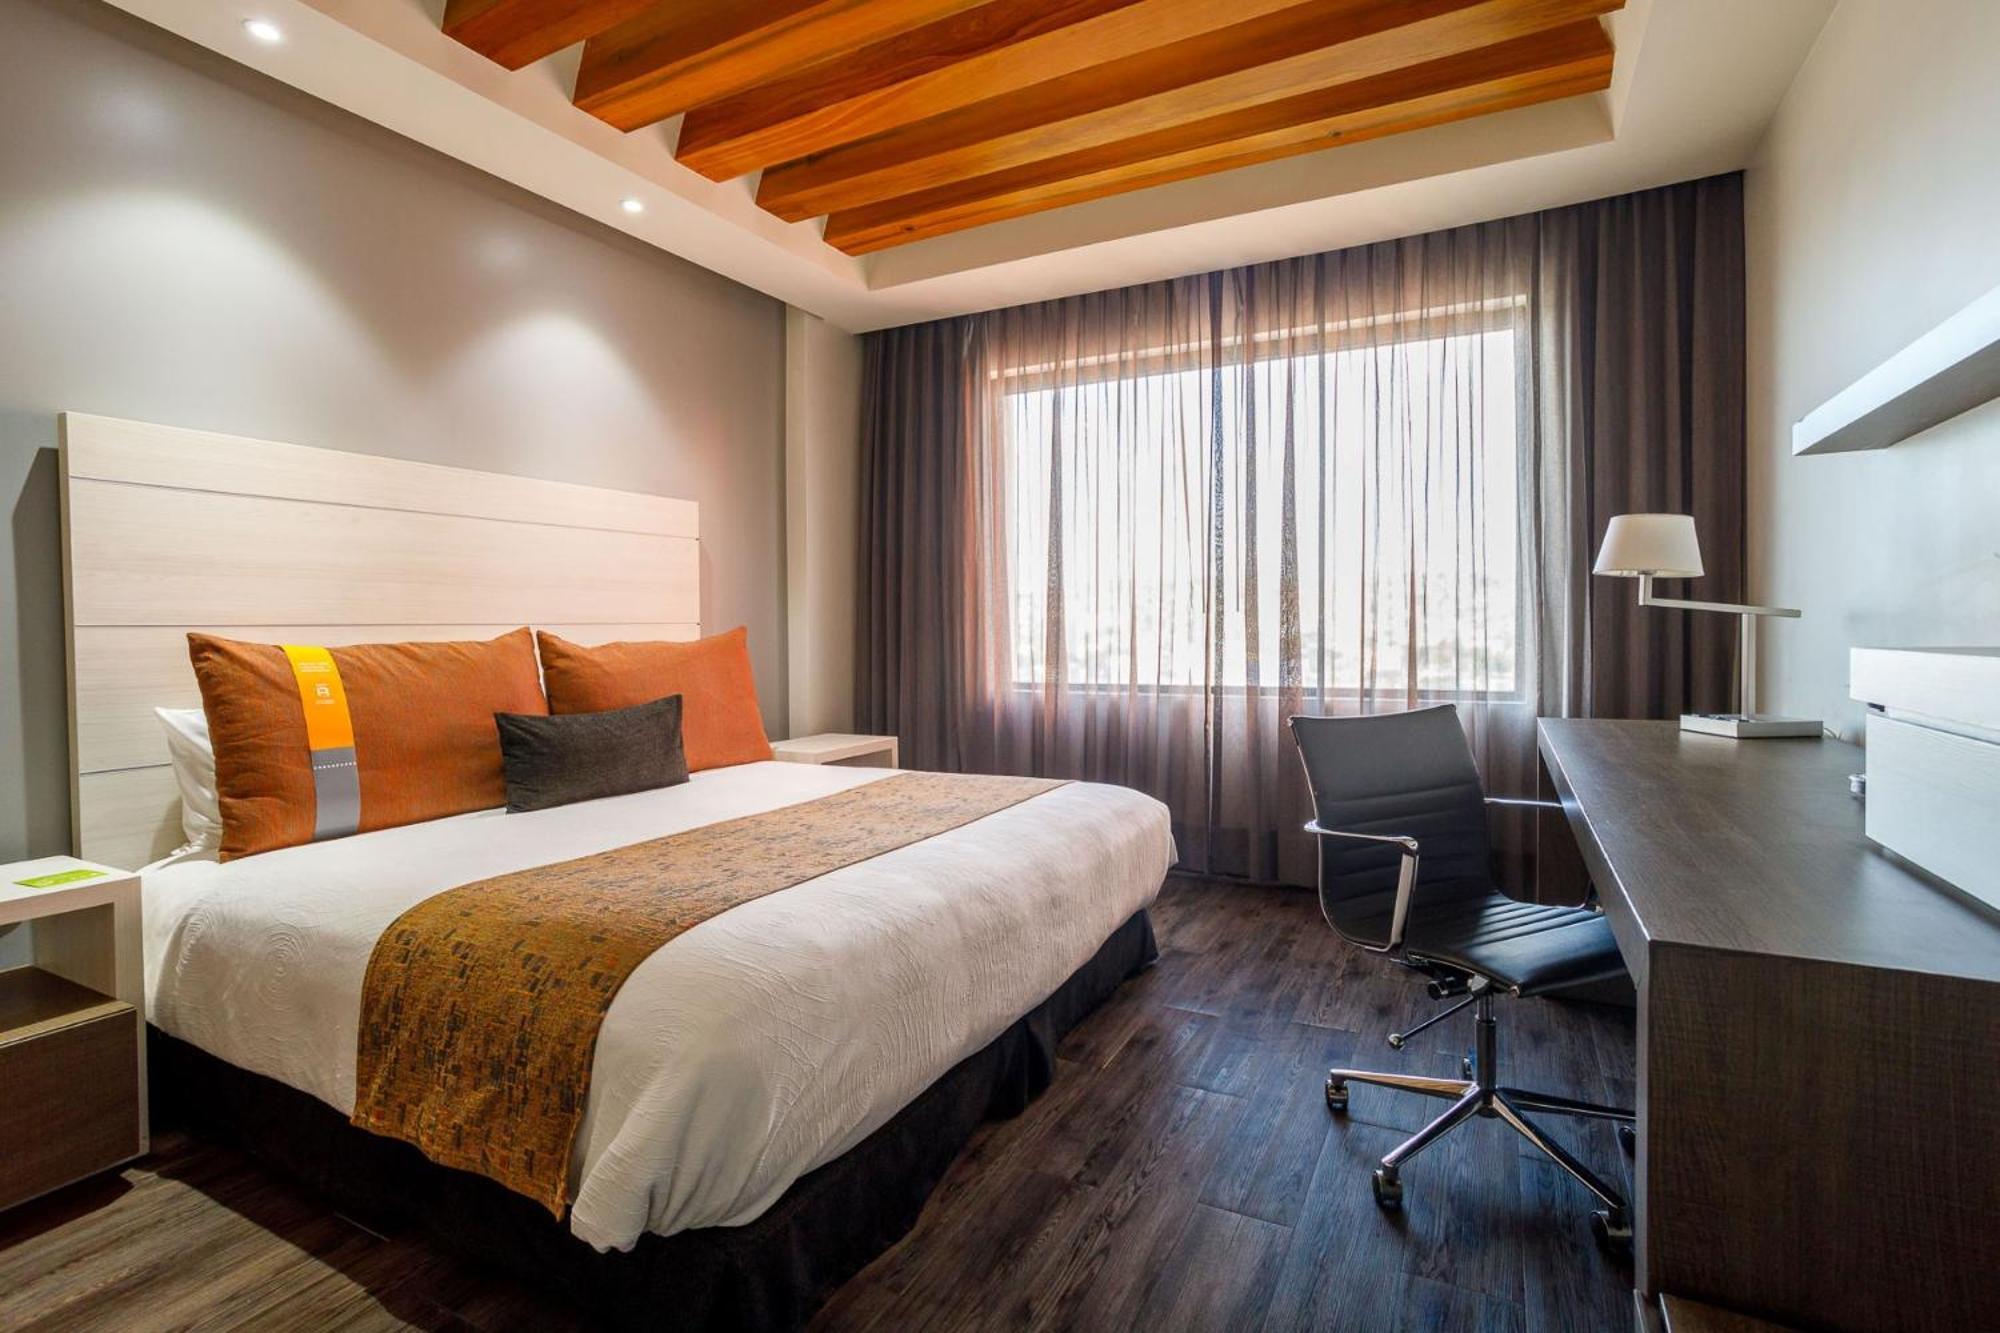 Real Inn Tijuana By Camino Real Hotels Экстерьер фото